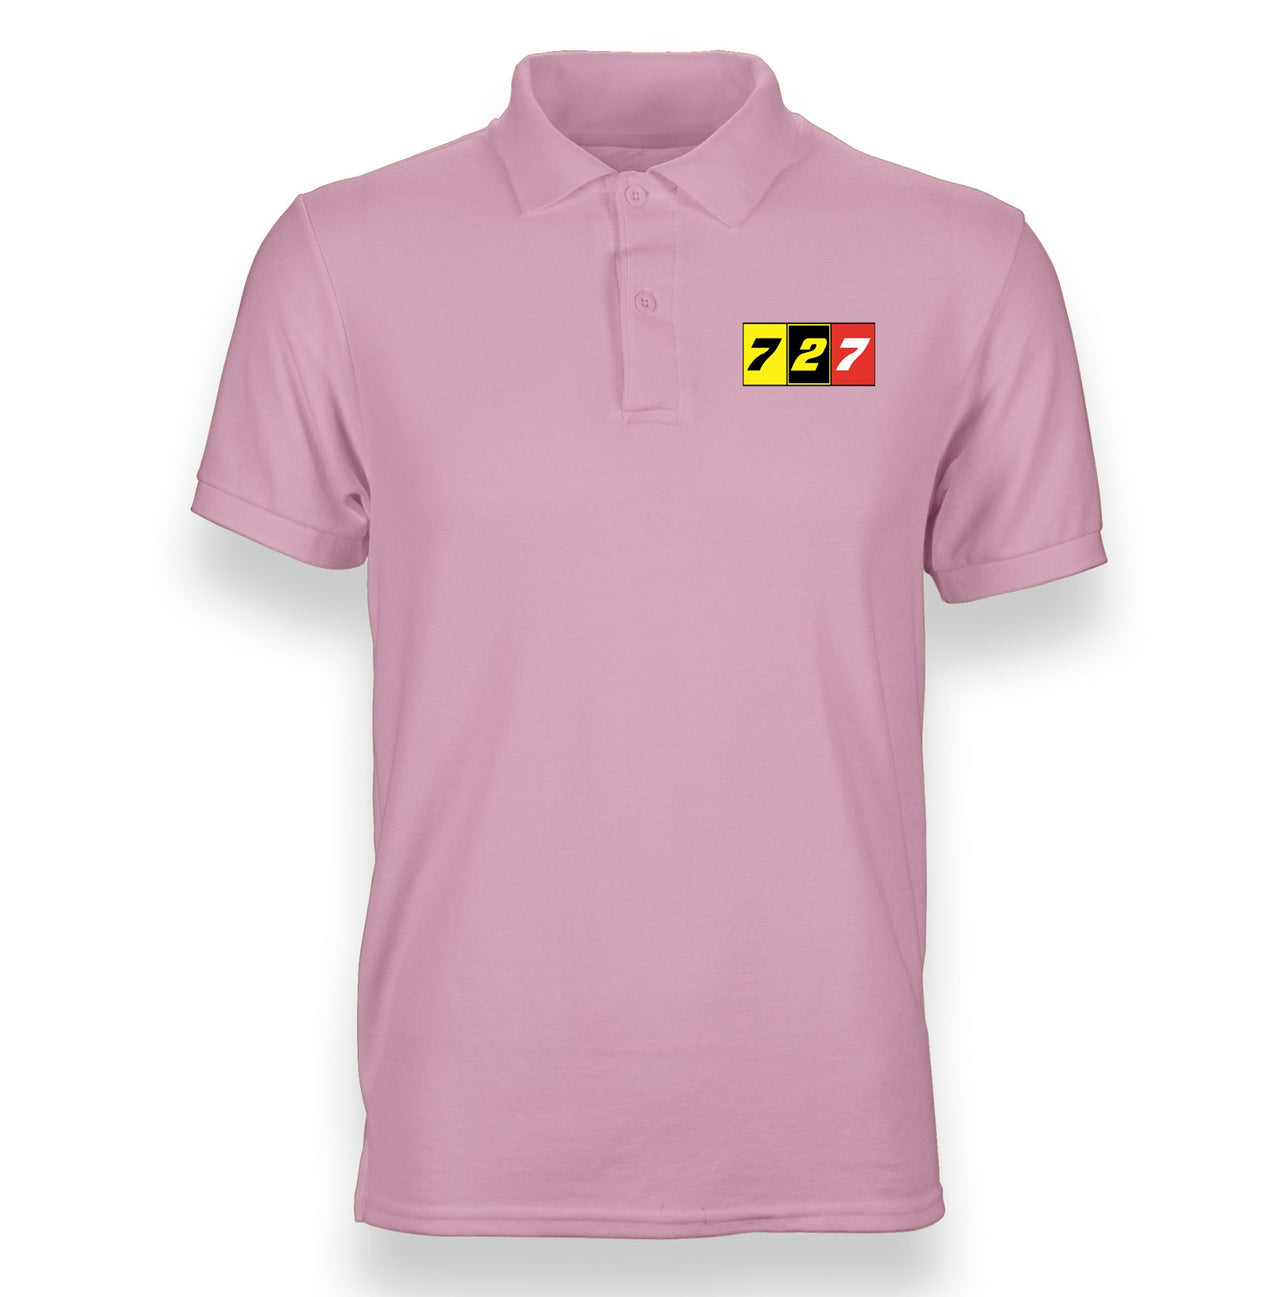 Flat Colourful 727 Designed "WOMEN" Polo T-Shirts